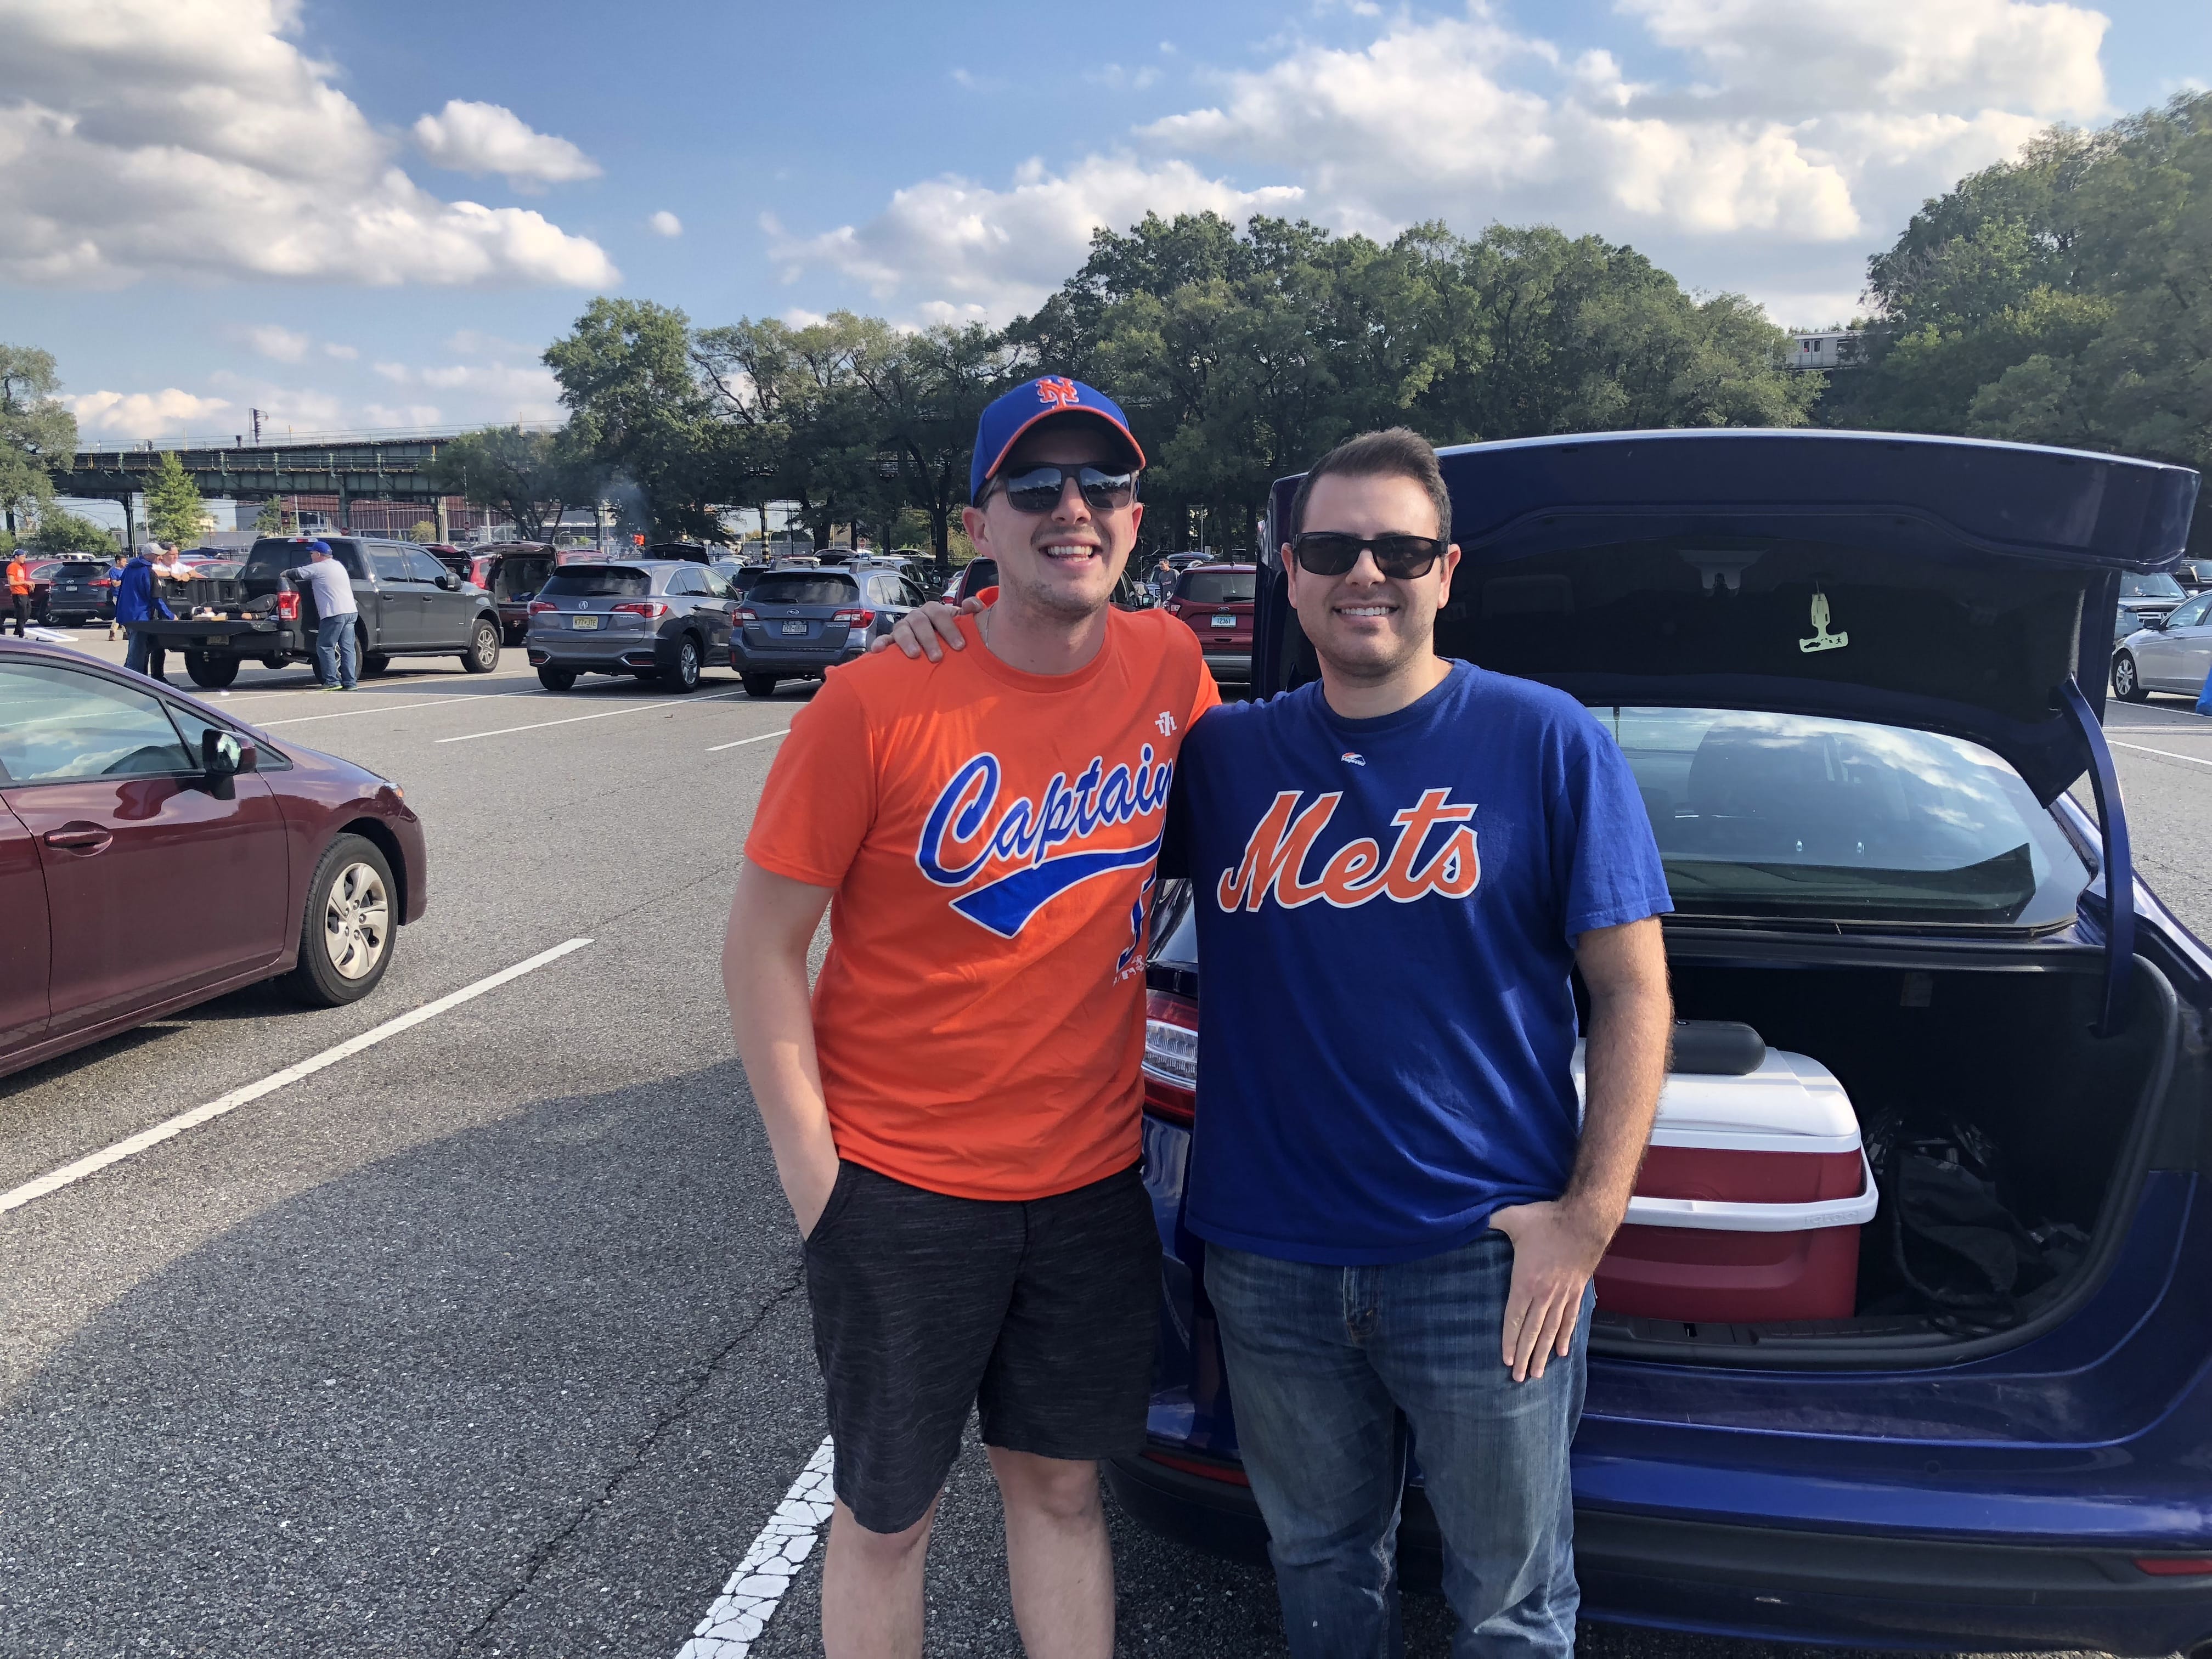 Kyle Brancato (left) and Michael Bonello (right) in the Citi Field parking lot on September 29, 2018 (Image Credit: Scott Orgera)